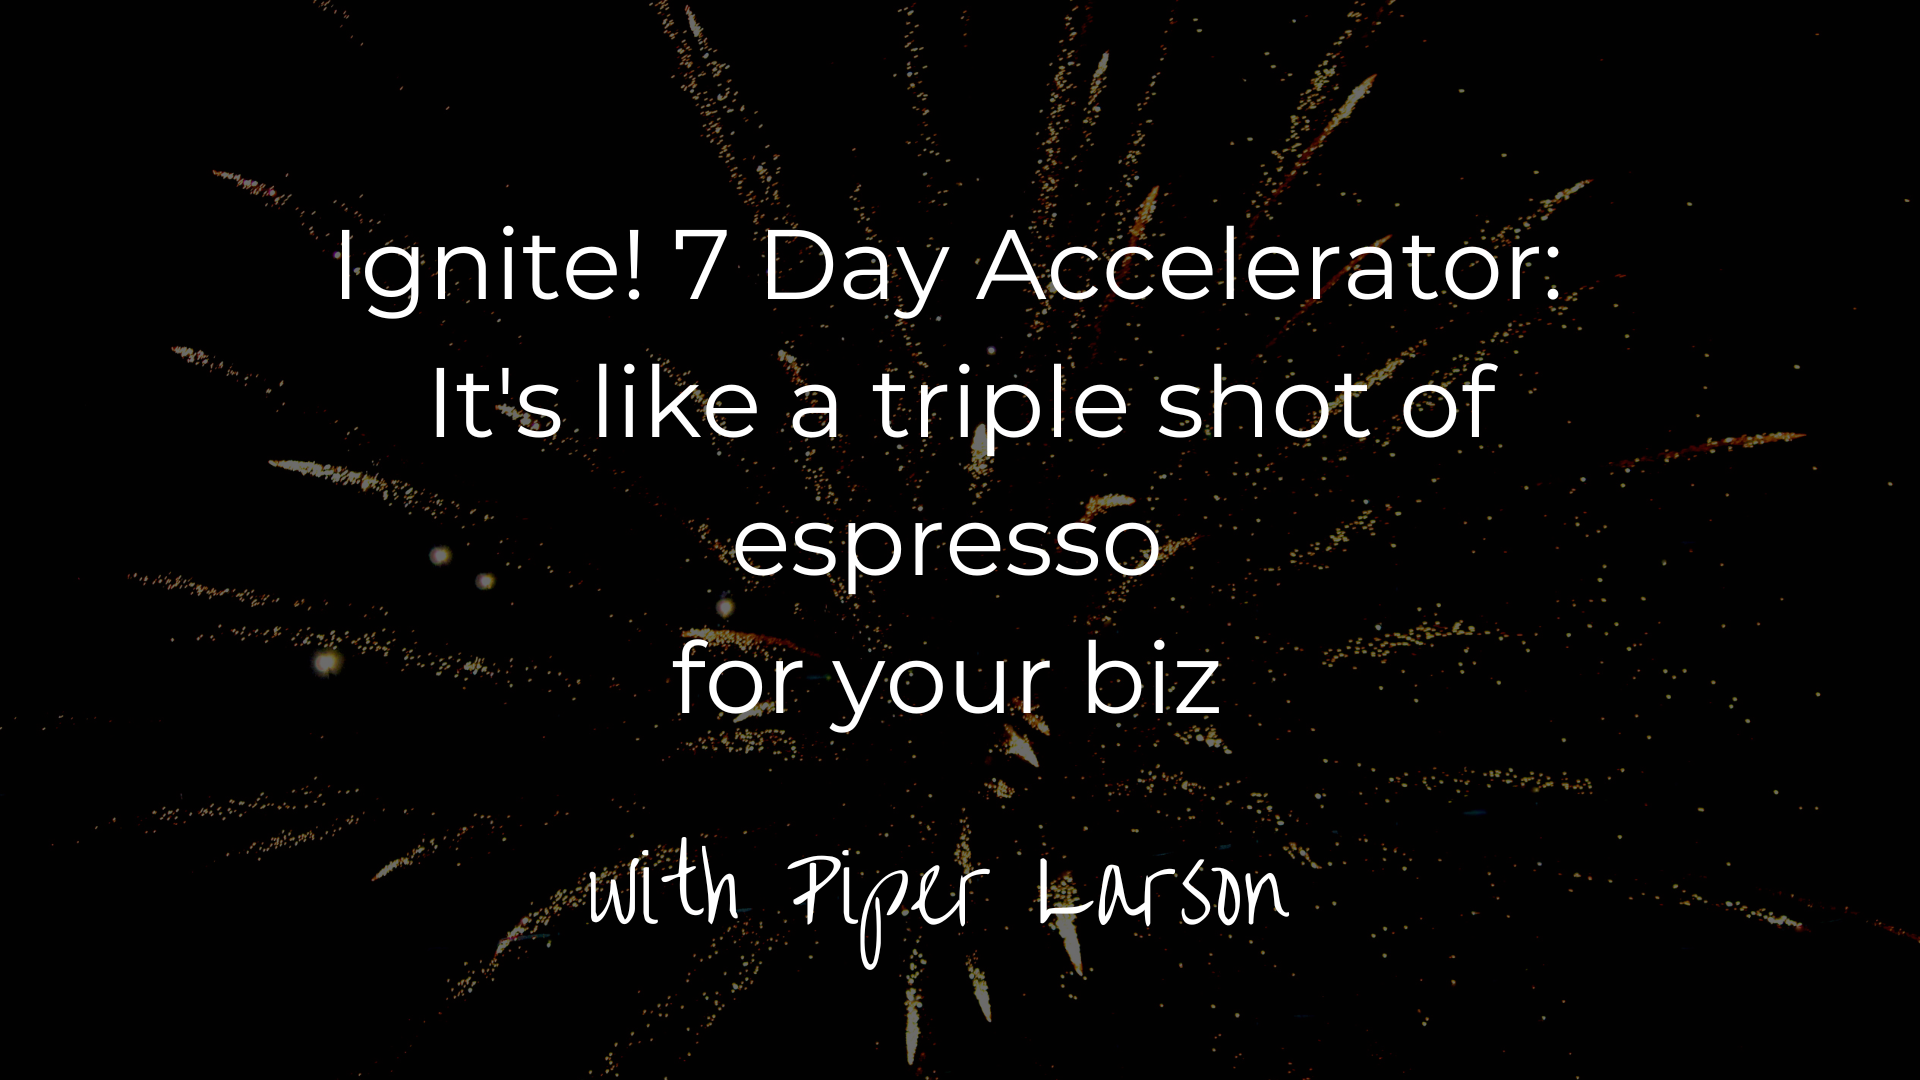 Ignite! 7 Day Accelerator for your biz